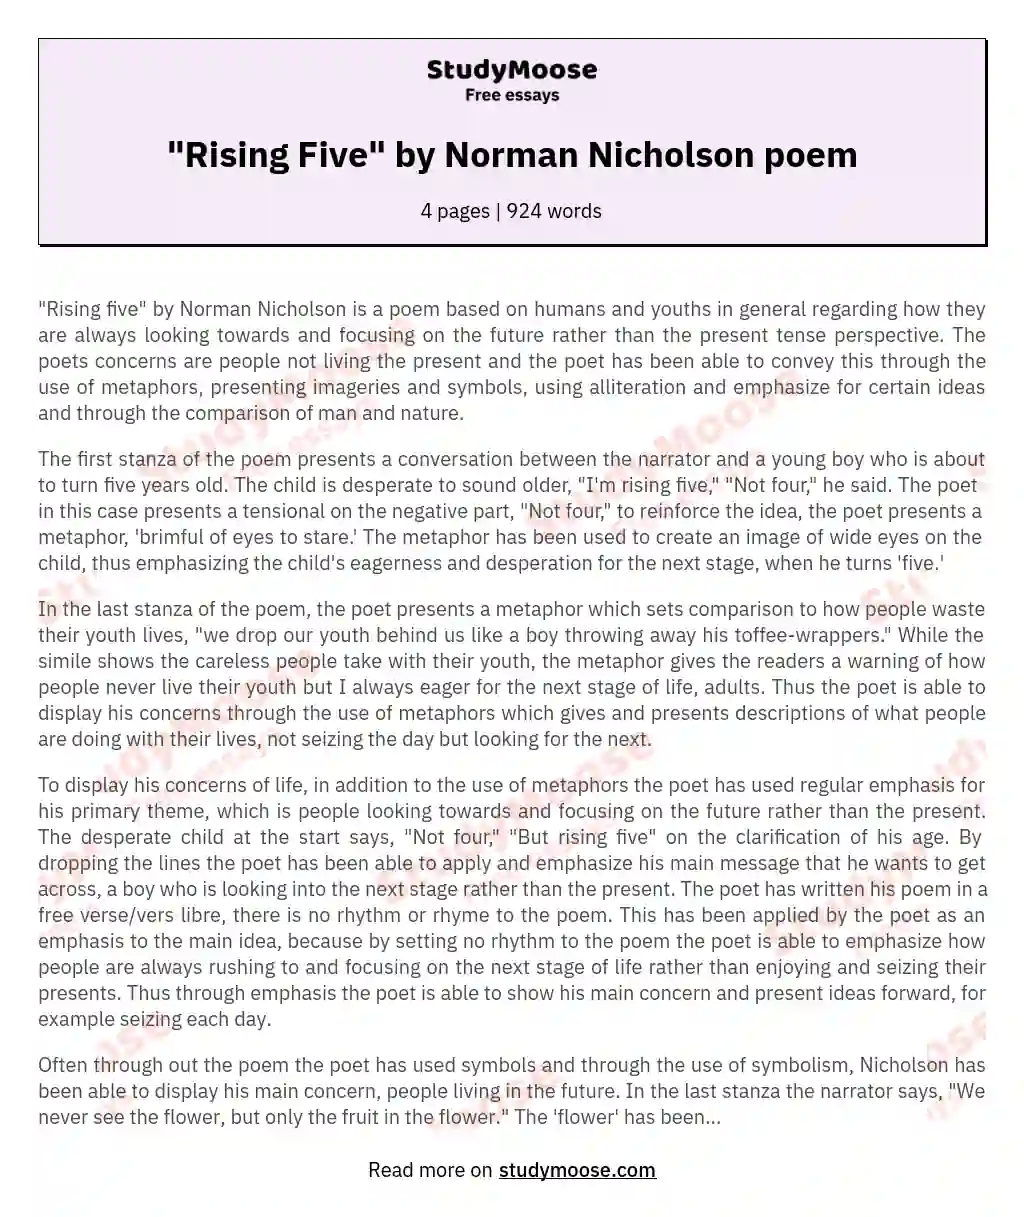 "Rising Five" by Norman Nicholson poem essay